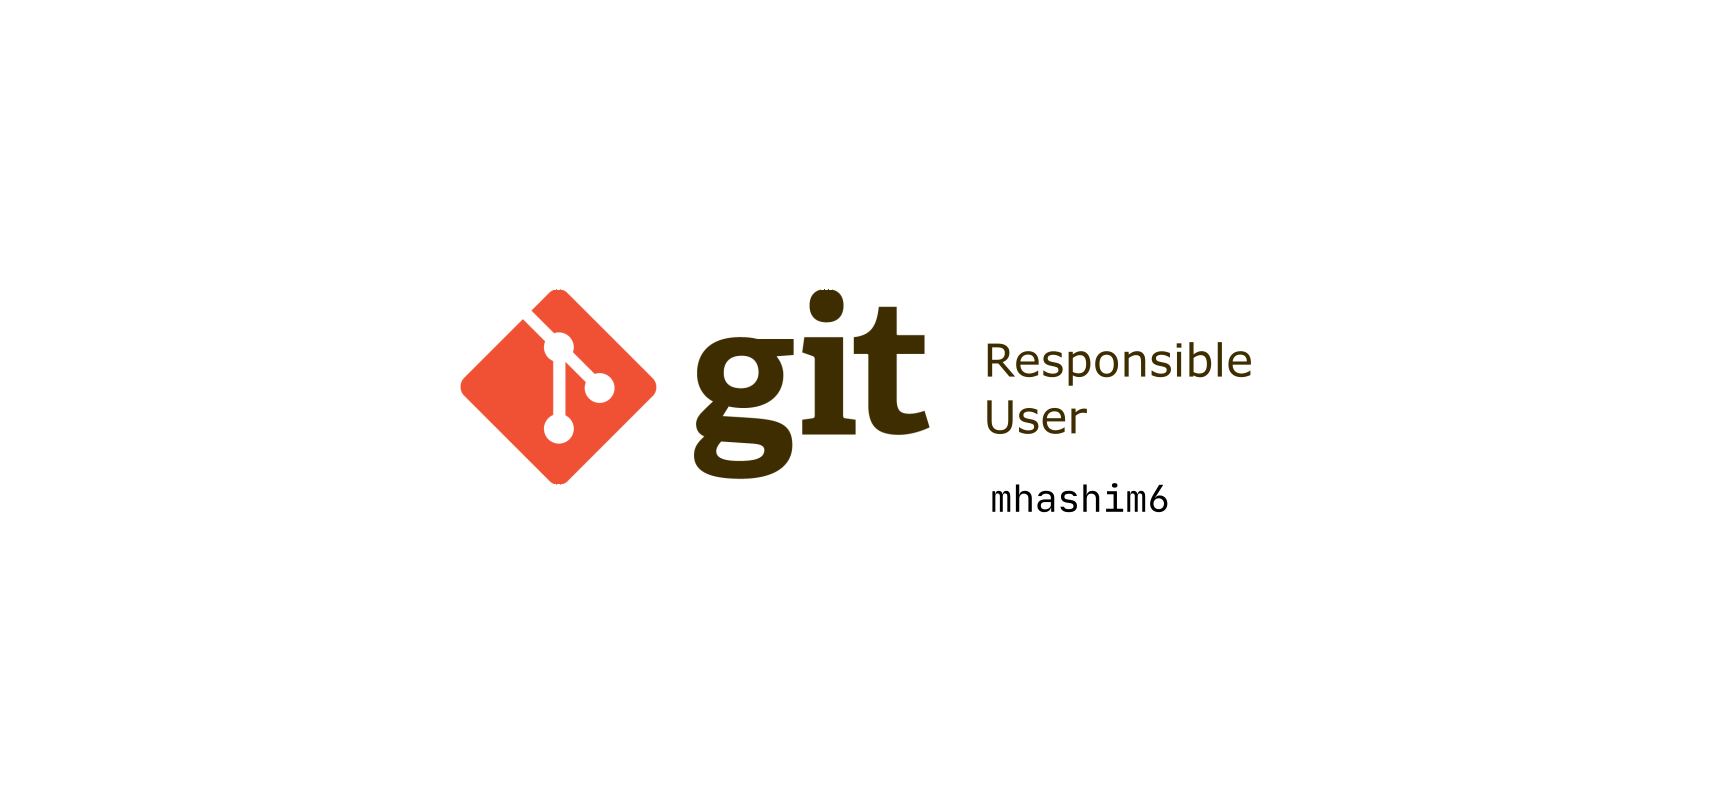 The Responsible Git User